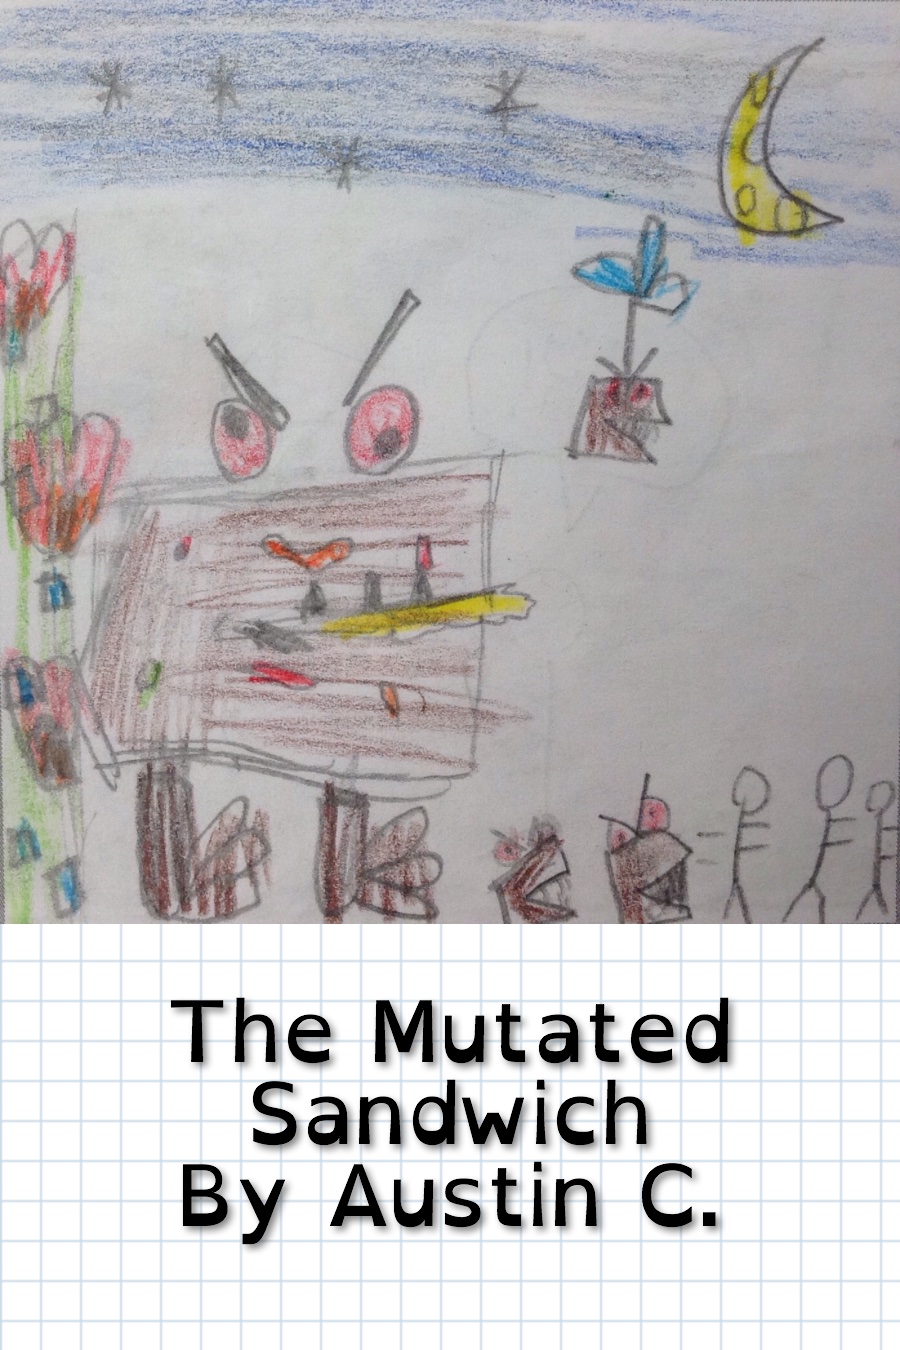 The Mutated Sandwich by Austin C